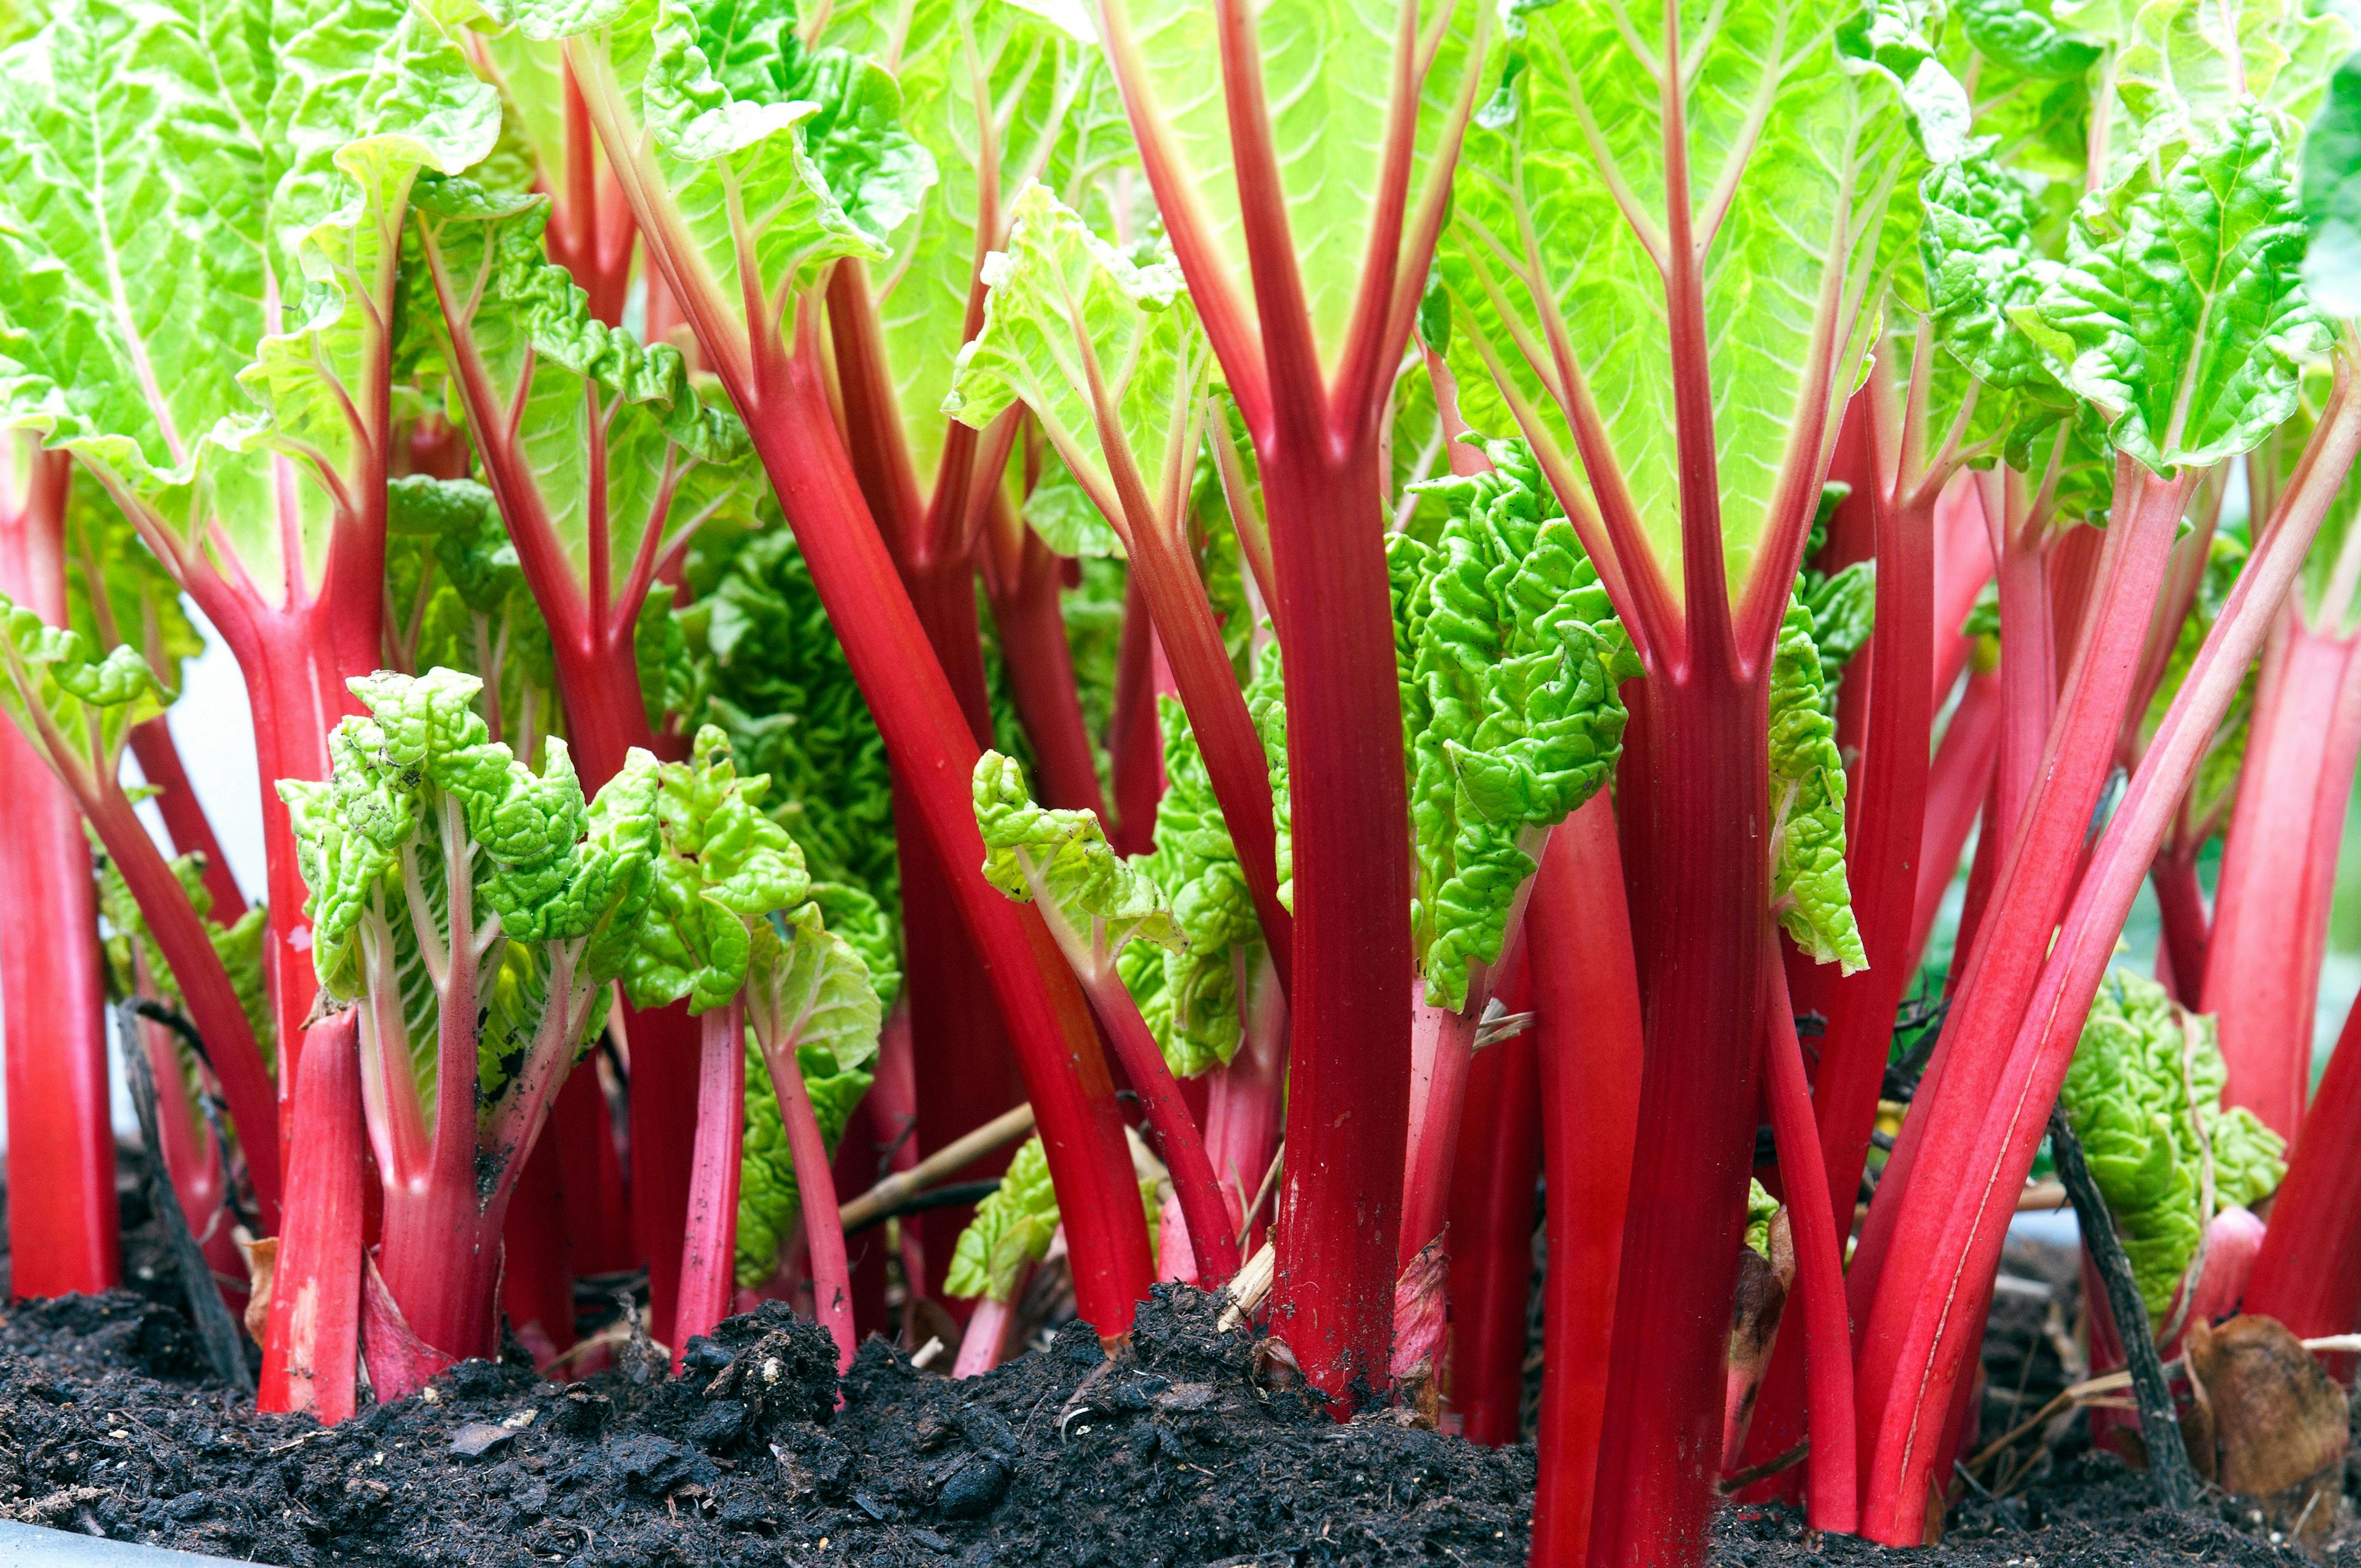 Stems of red rhubarb | Image Credit: © HVPM dev - stock.adobe.com